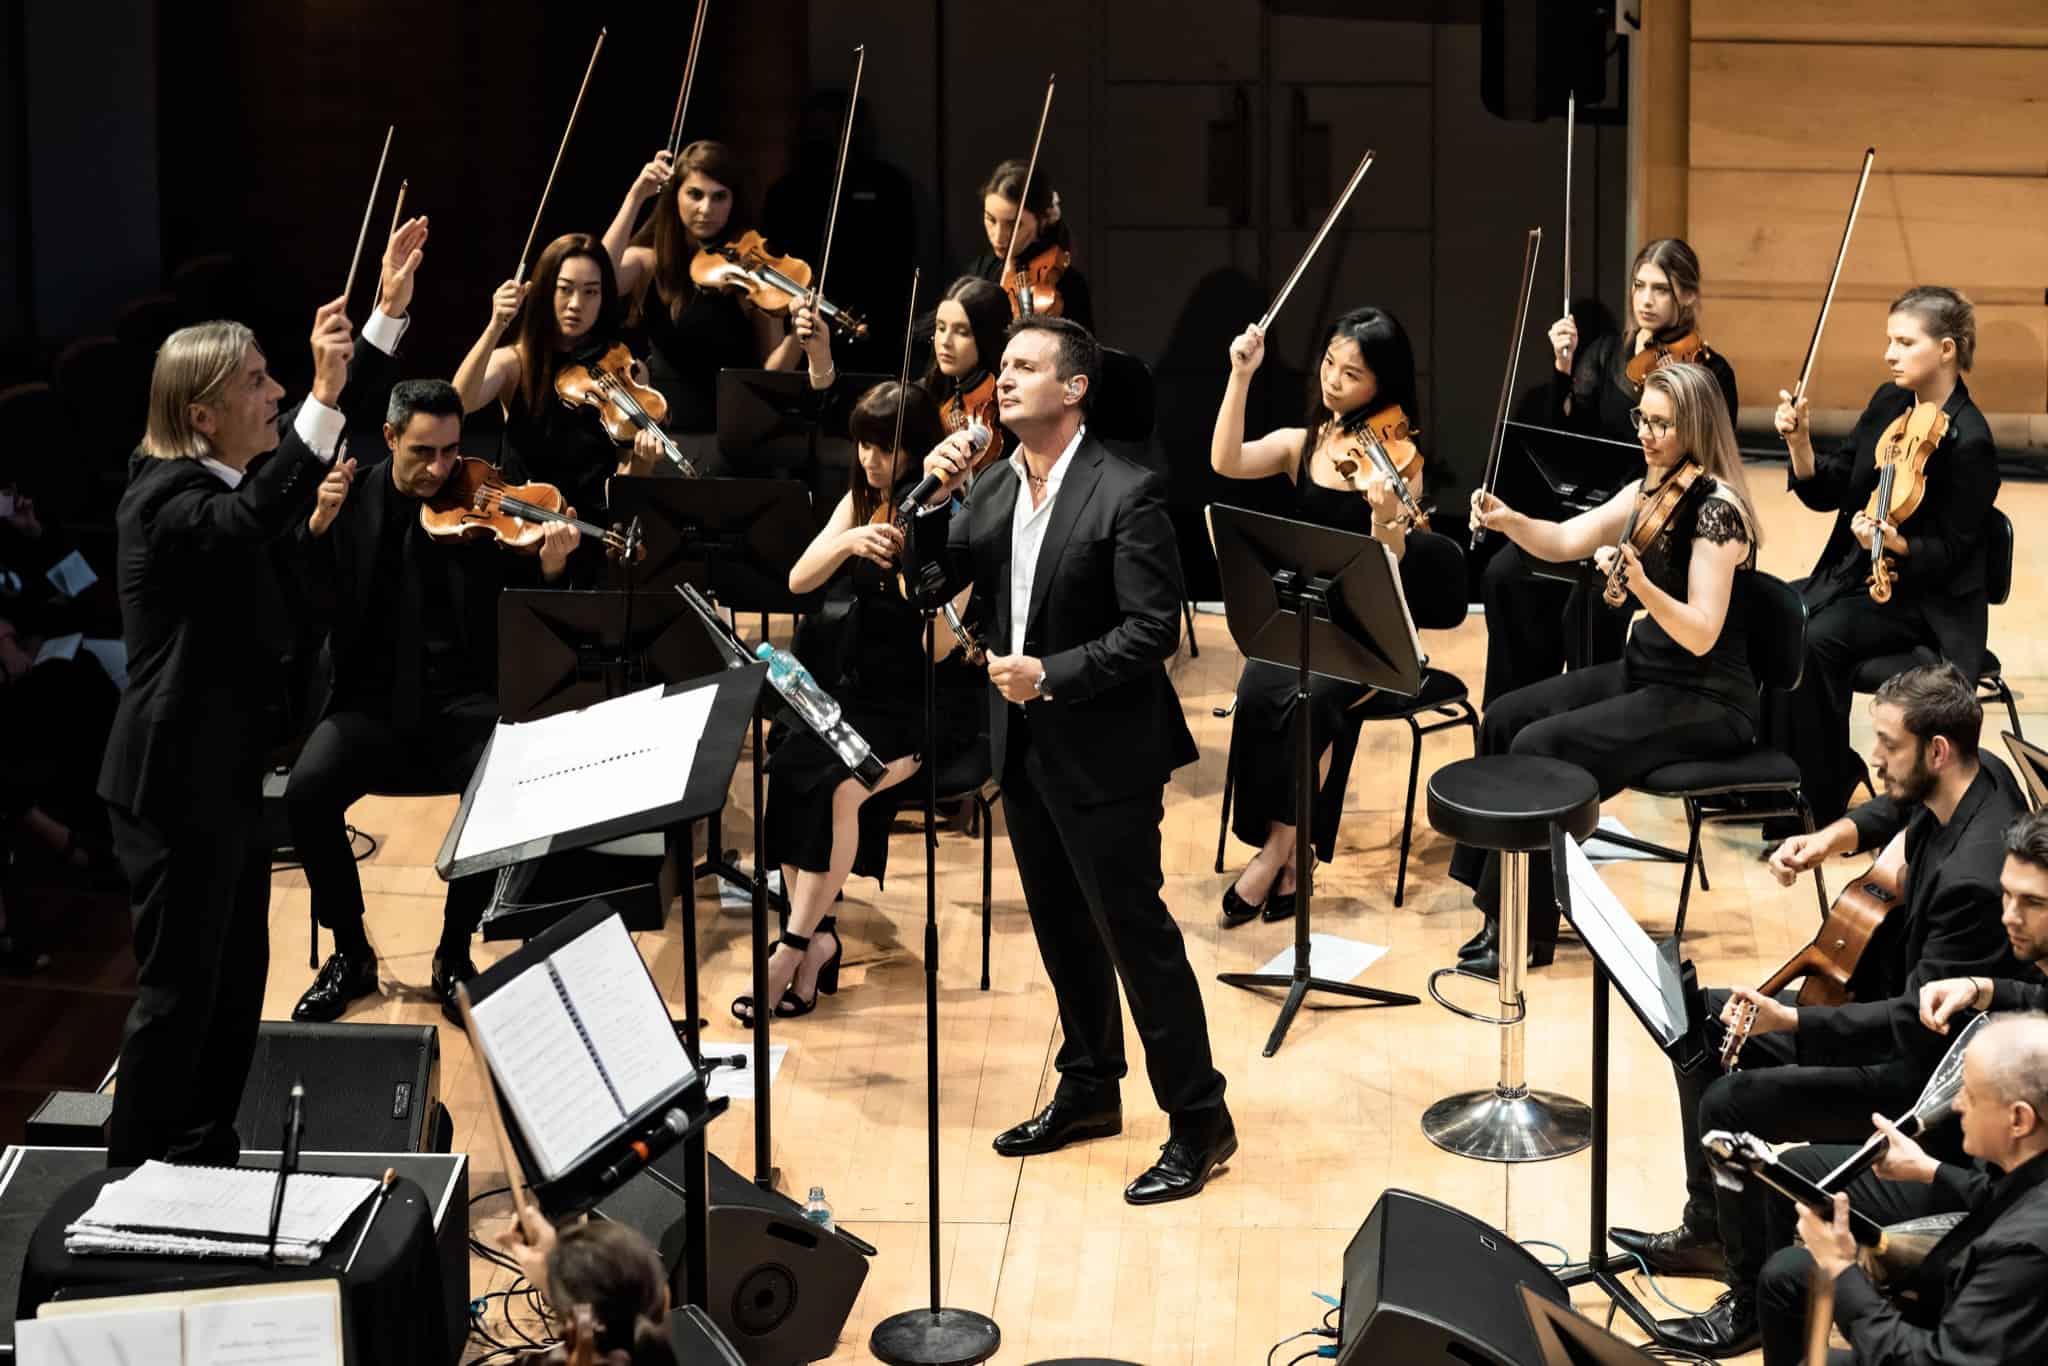 Miki Theodorakis Tribute Concert at City Recital Hall a resounding success 64